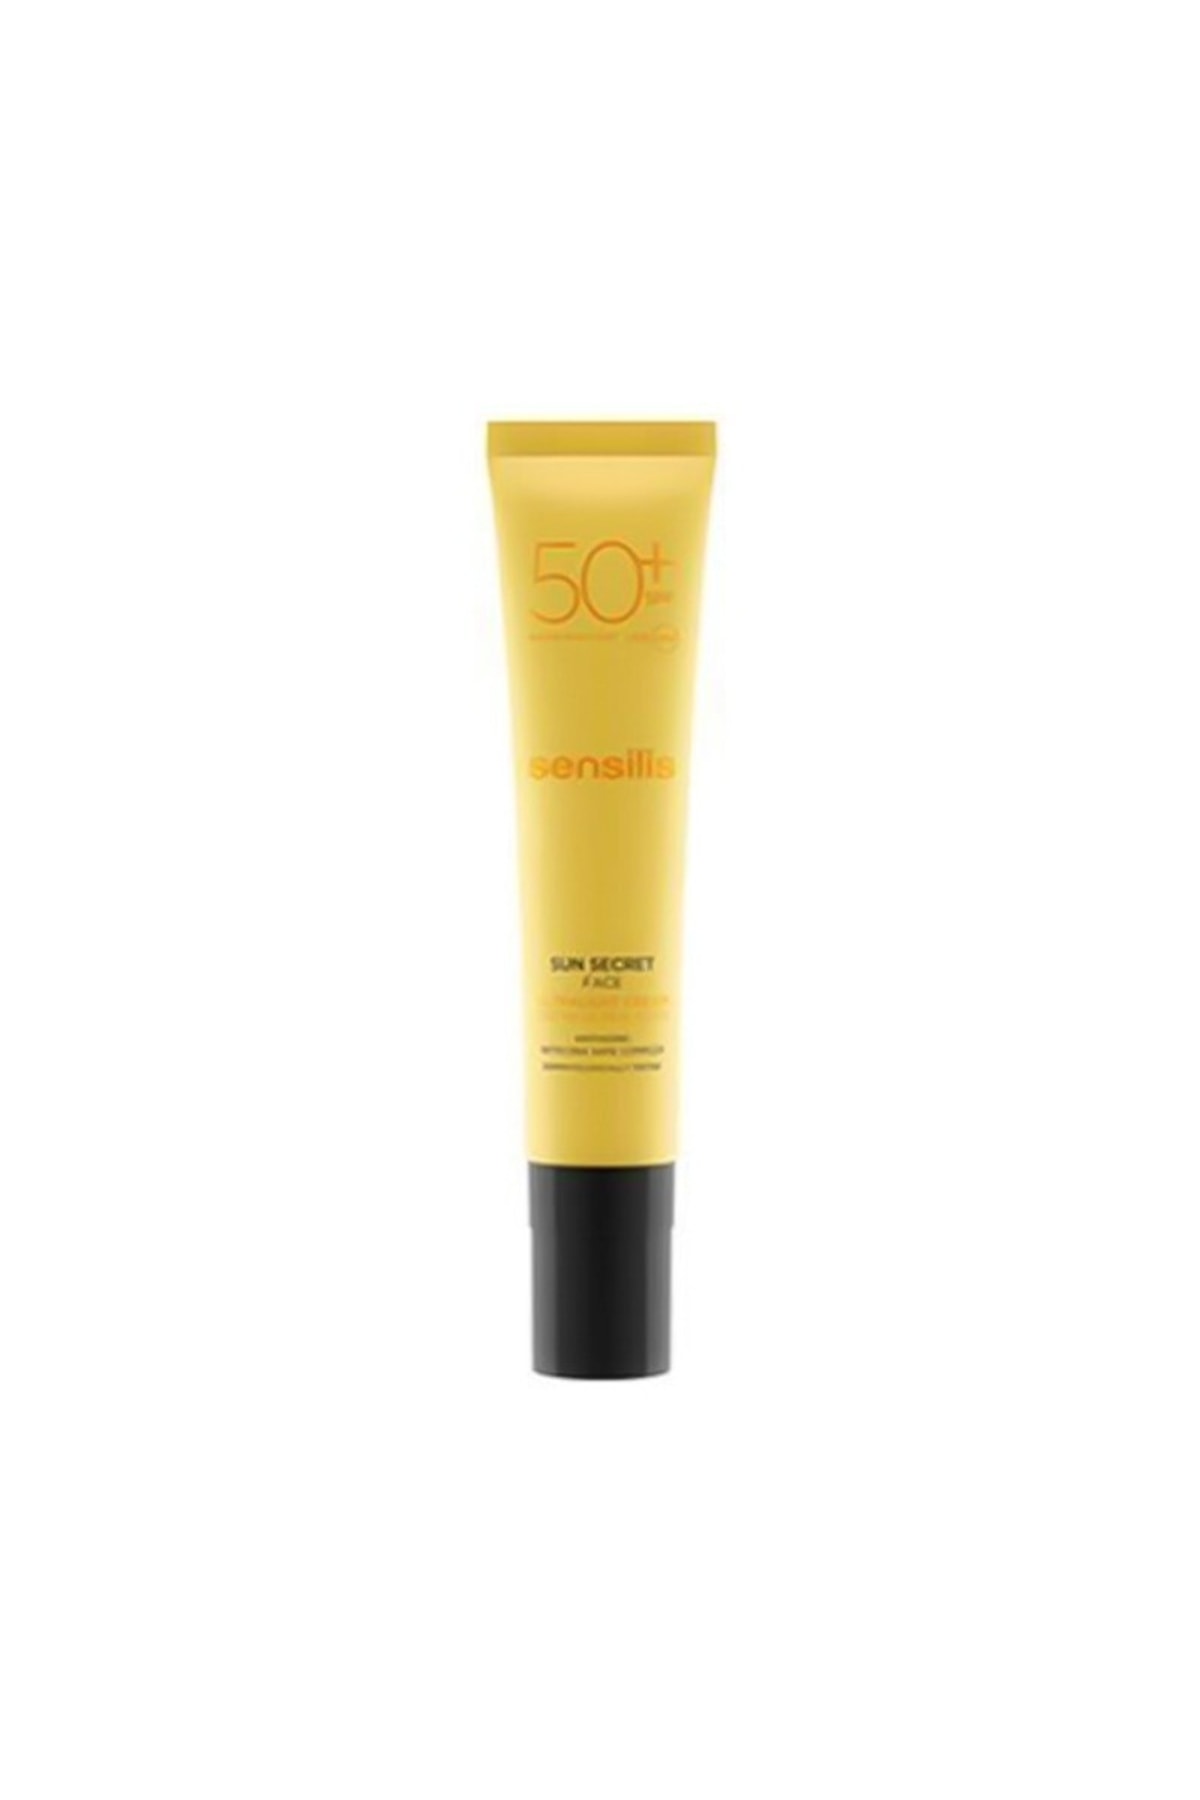 sensilis Sun Secret Protective & Anti Aging Fluid Face Cream Spf50+ 40ml